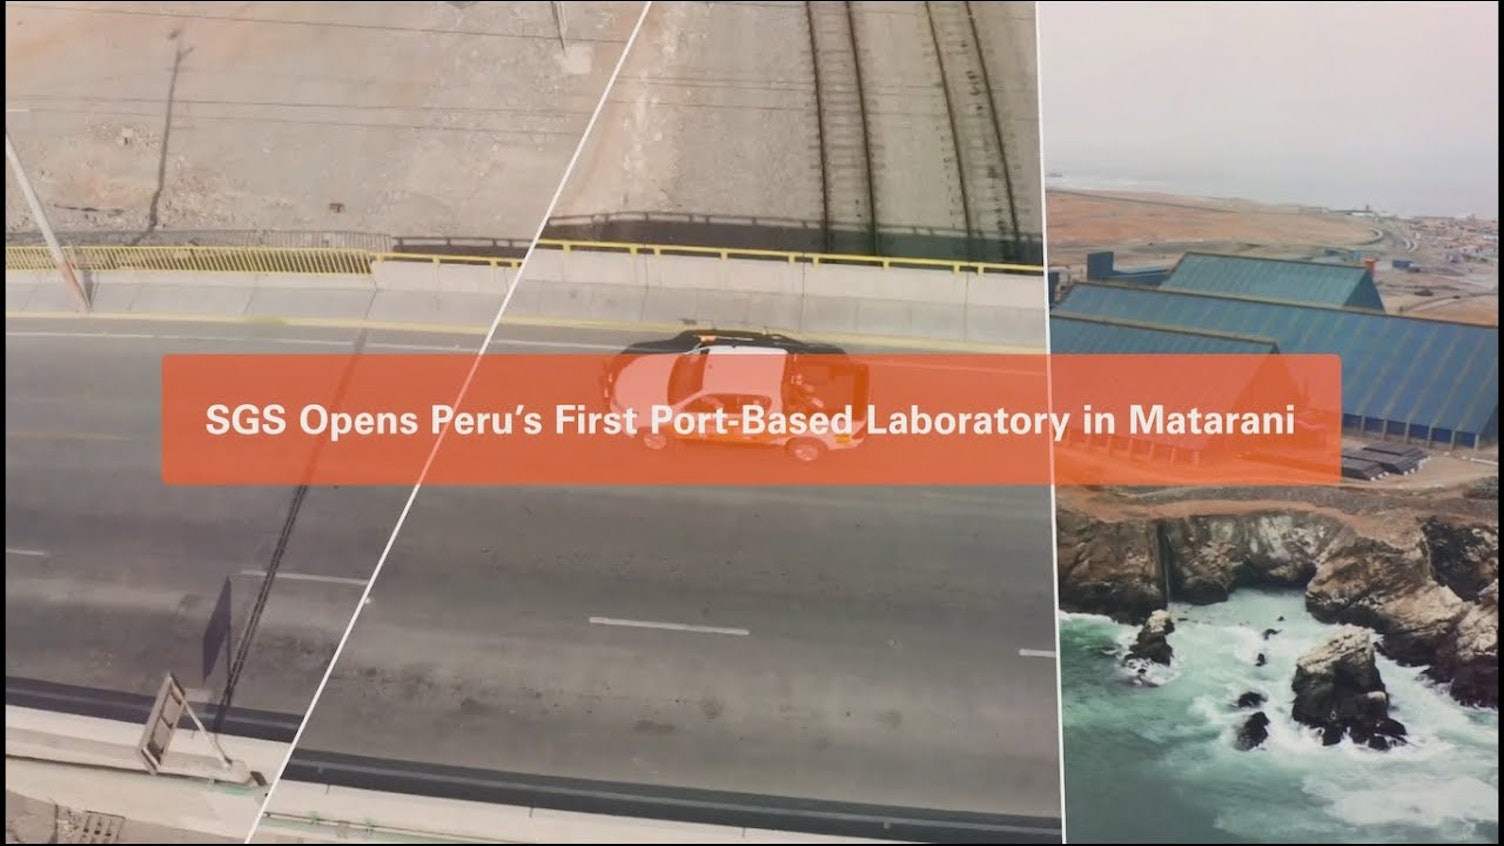 SGS Opens Peru’s First Port-Based Laboratory in Matarani